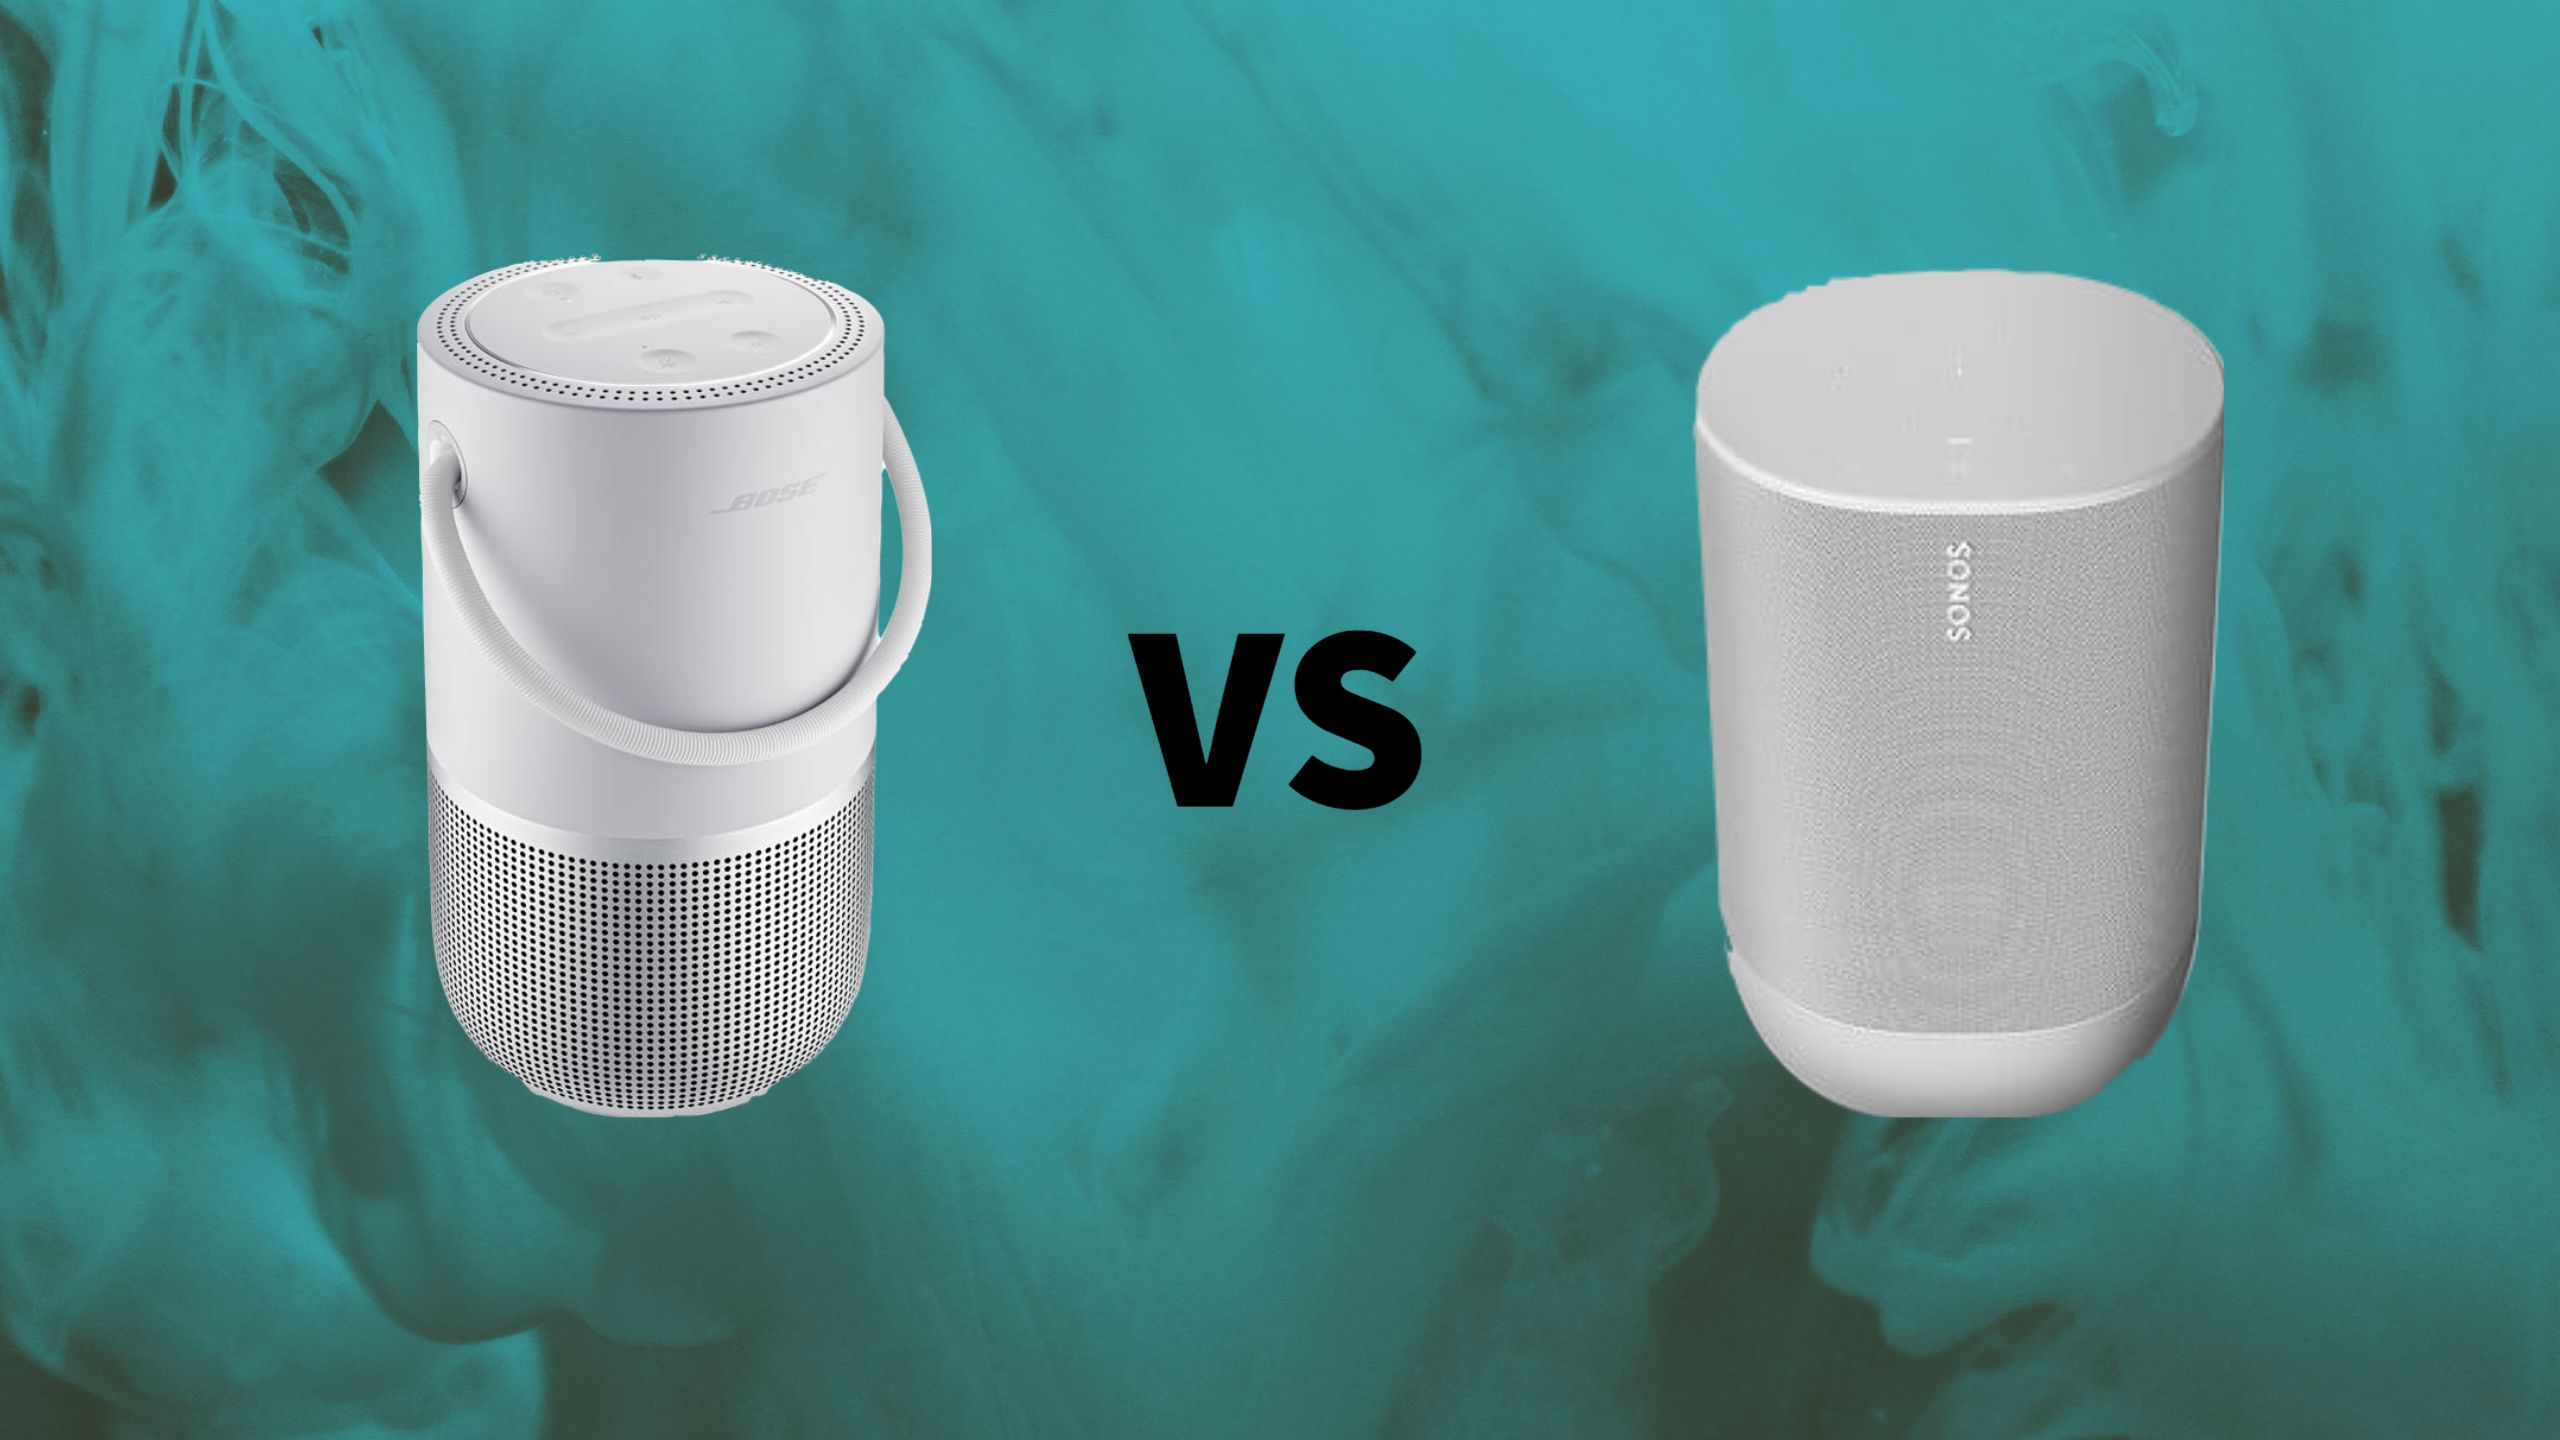 Bose Portable Home Speaker vs Sonos One